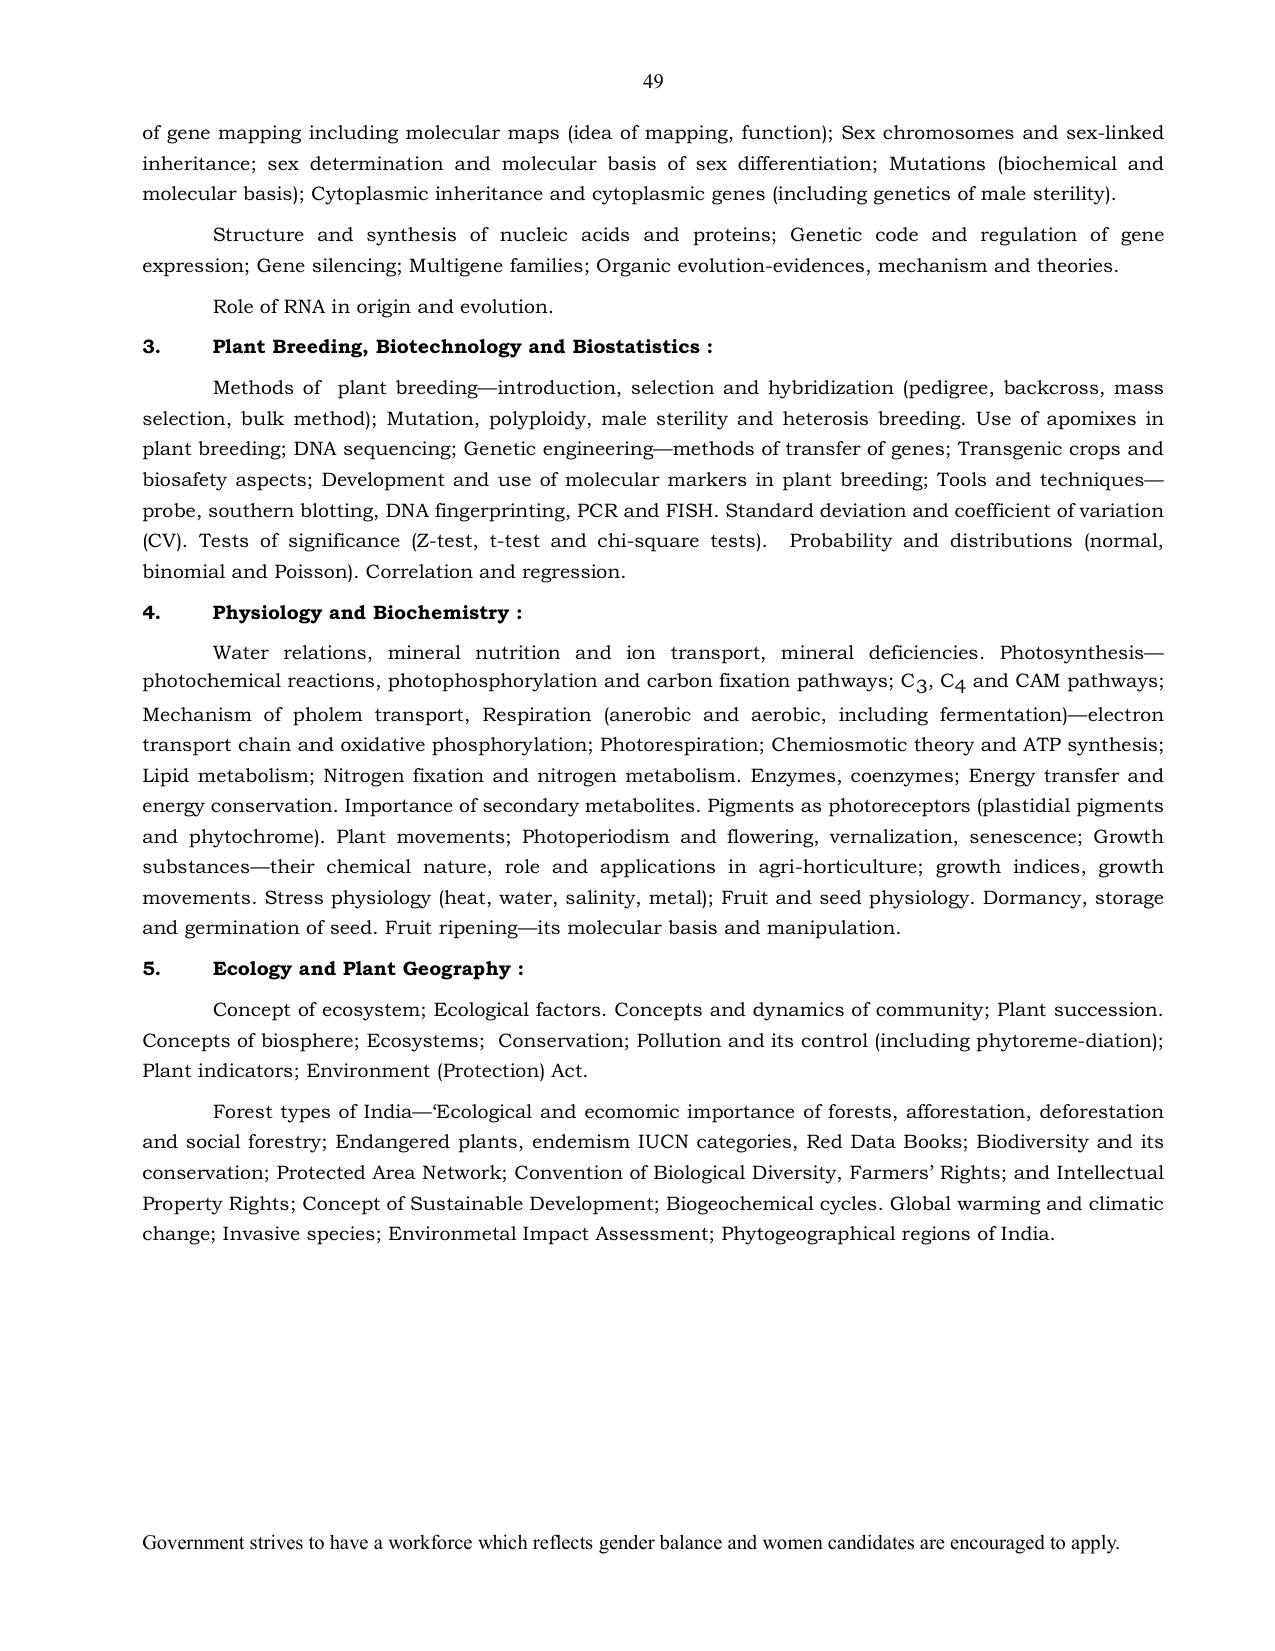 UPSC Syllabus Prelims & Mains Pdf Link - Page 25